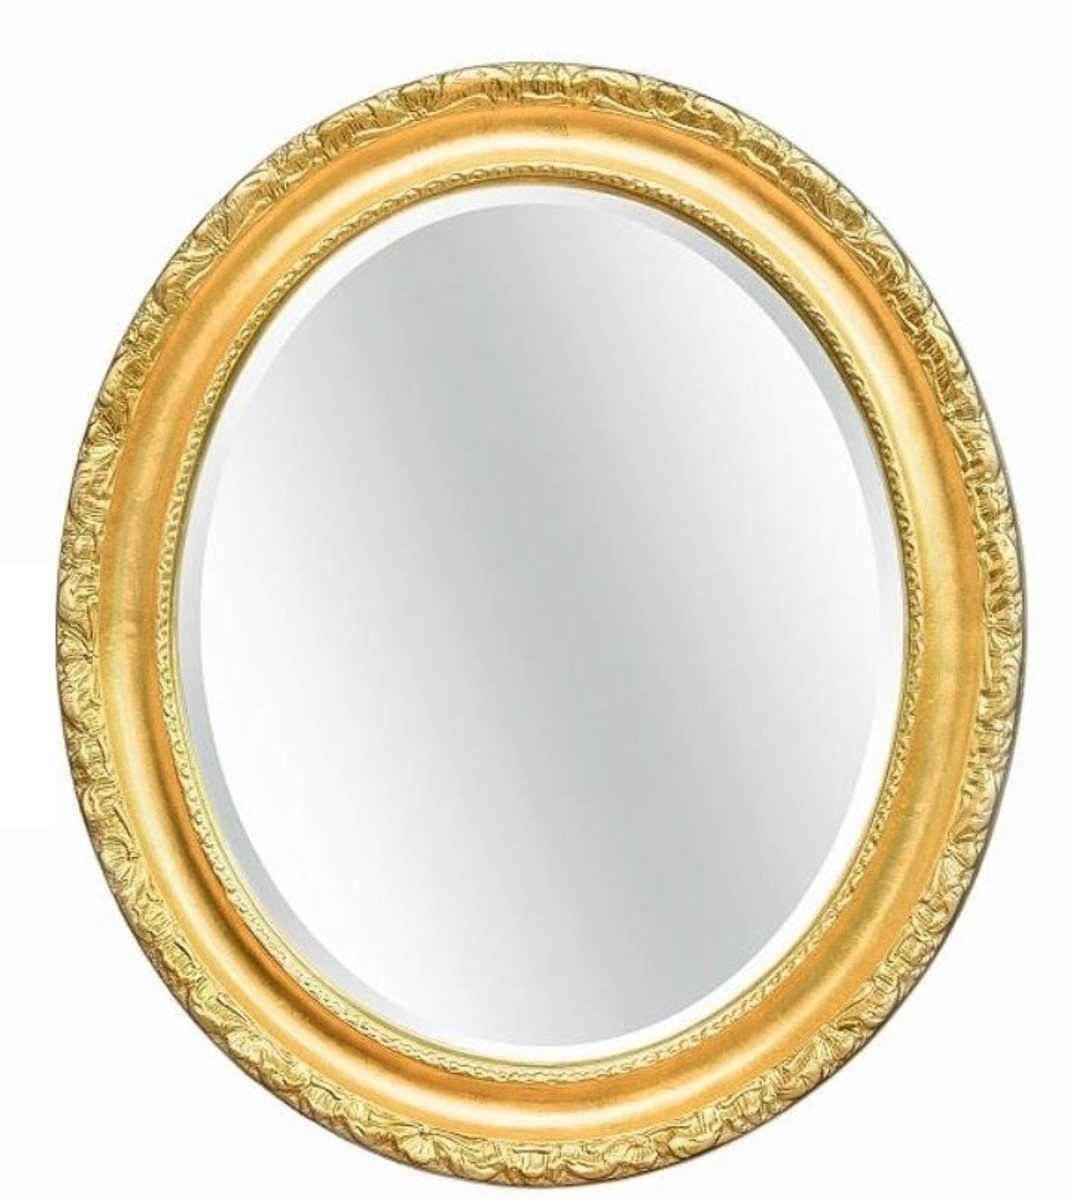 Casa Padrino Barockspiegel Luxus Barock Spiegel Gold 54 x 6 x H. 64 cm - Ovaler Wandspiegel im Barockstil - Barock Möbel